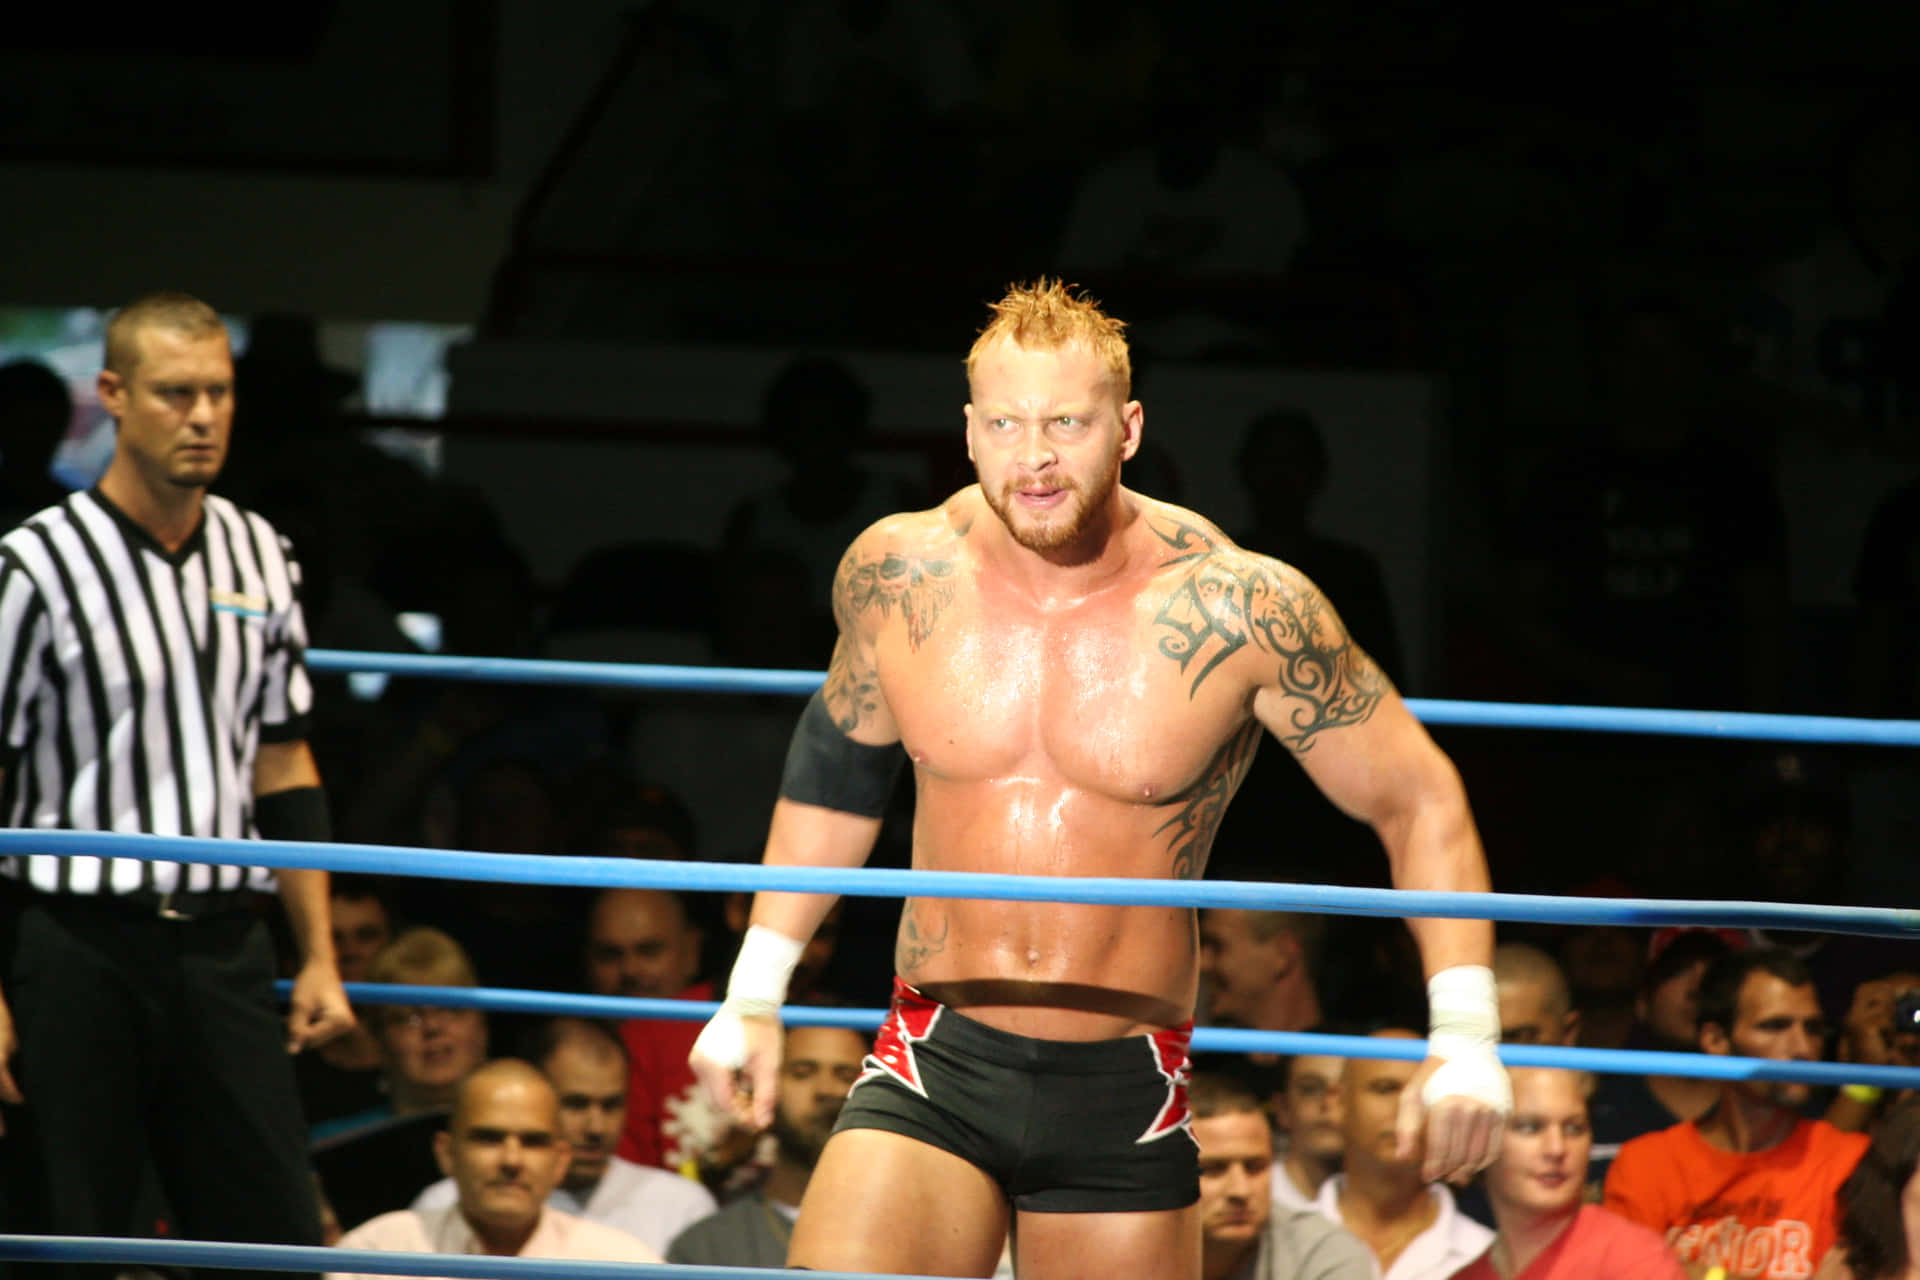 Crimson I Ringen TNA Live Event, fyldt med intens action. Wallpaper